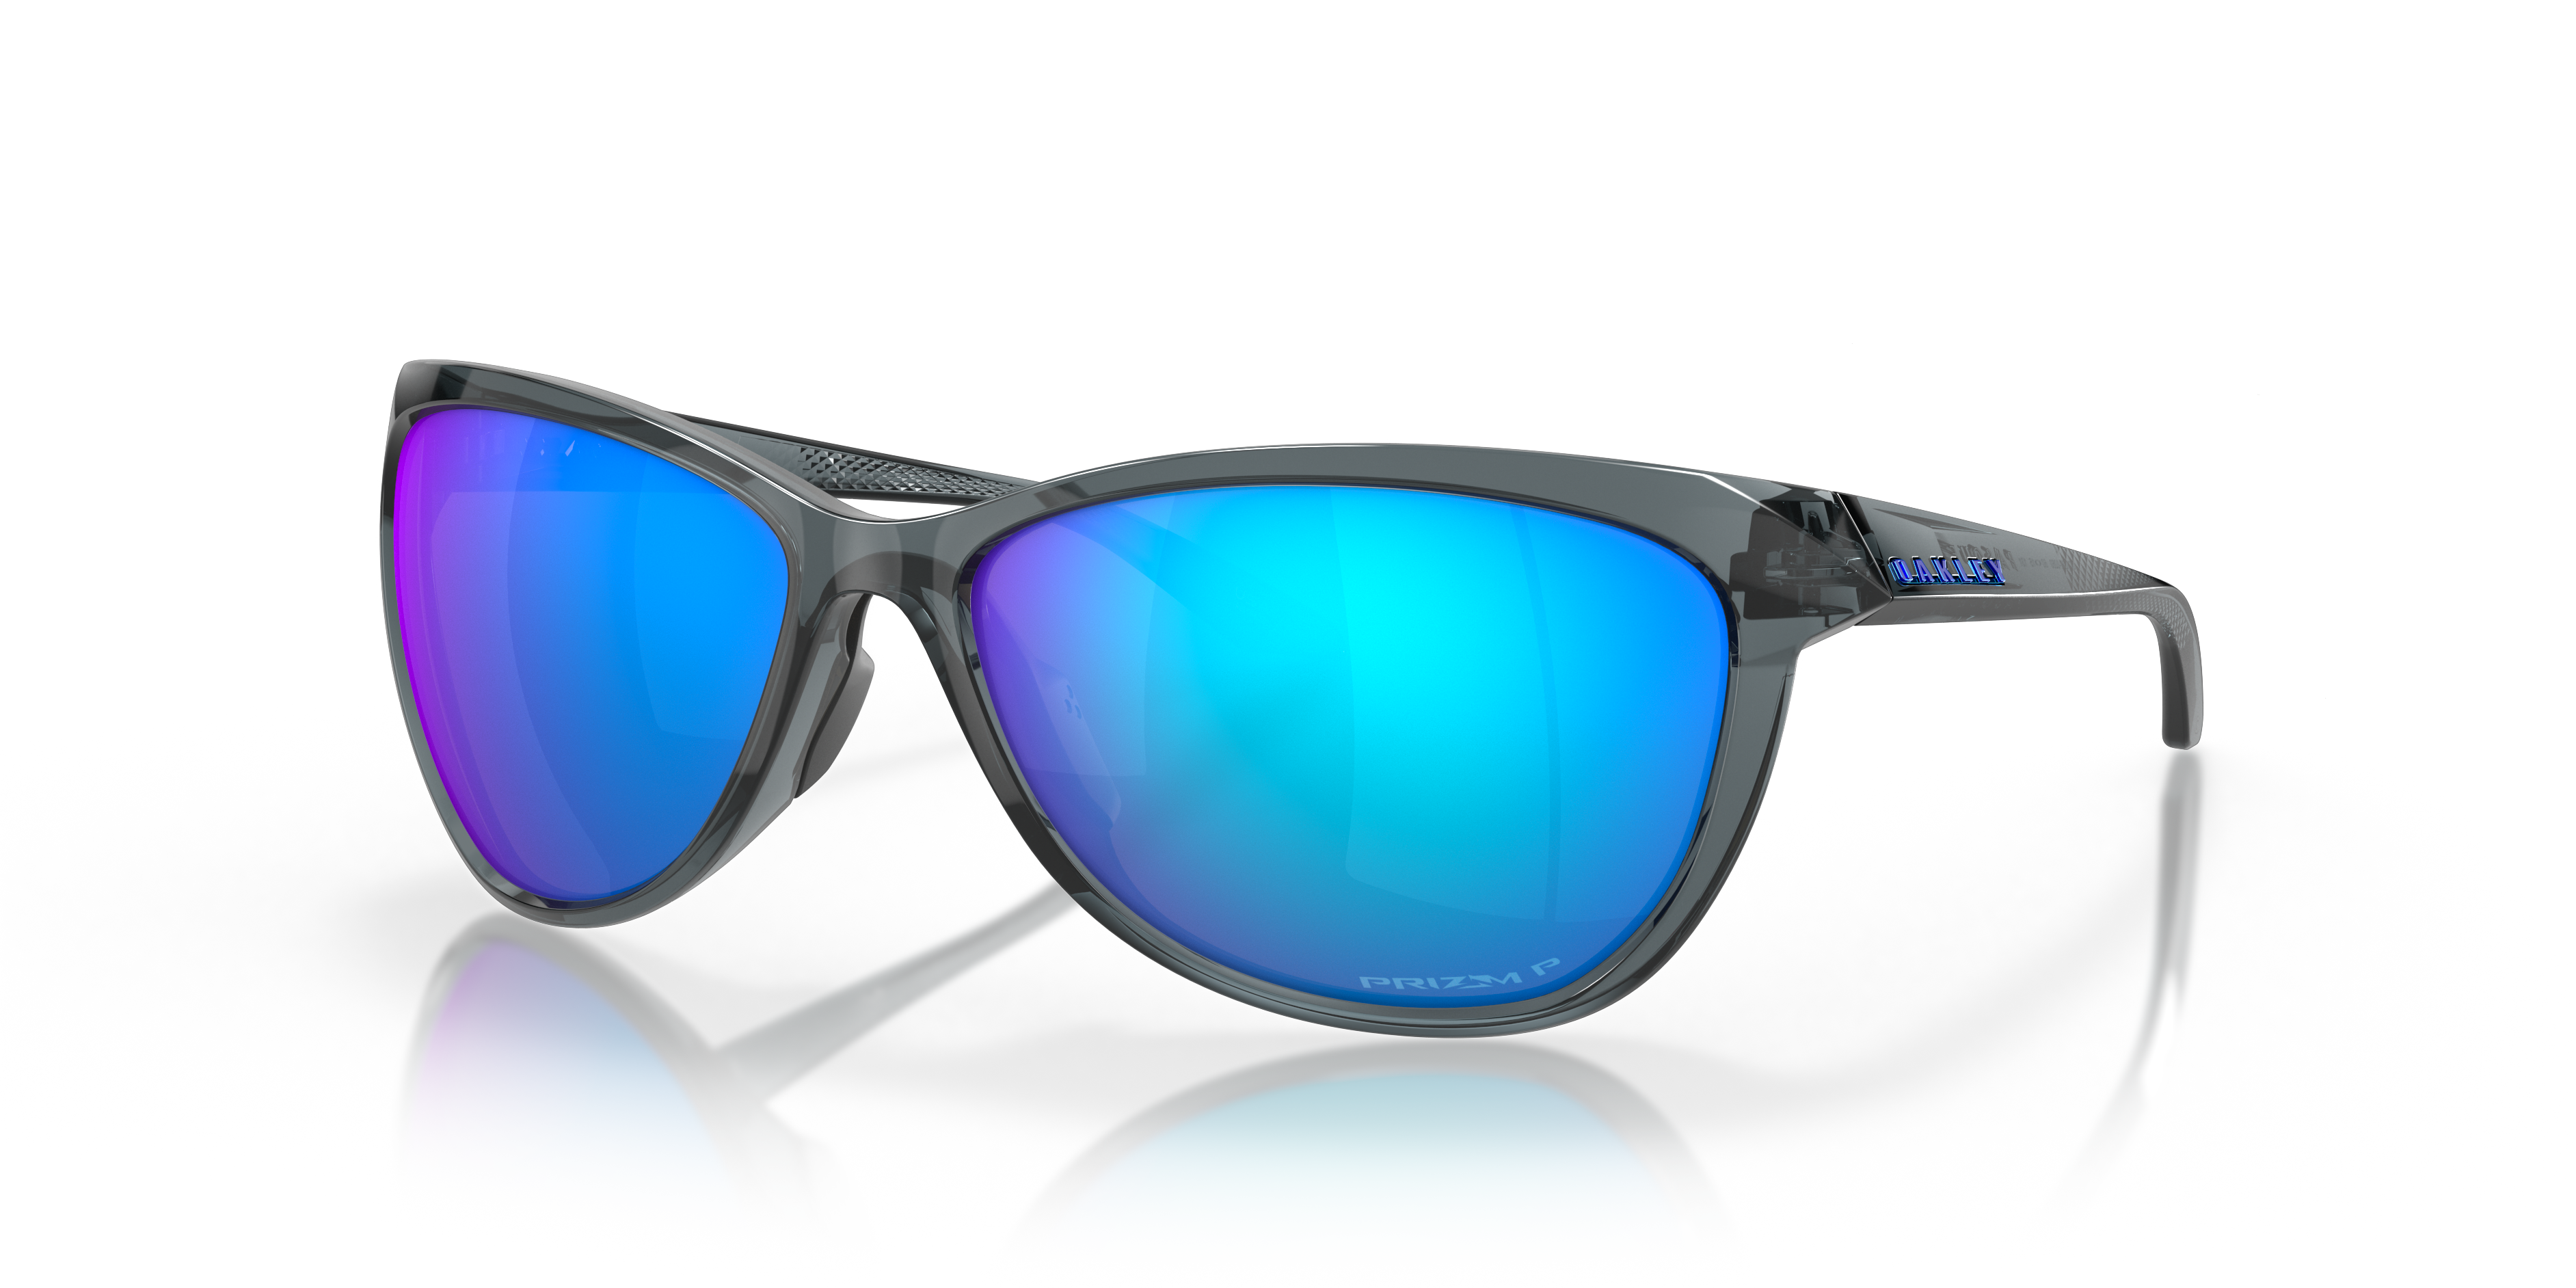 Walleva Ice Blue Polarized Replacement Lenses for Oakley Crosshair 2.0  Sunglasses - Walmart.com